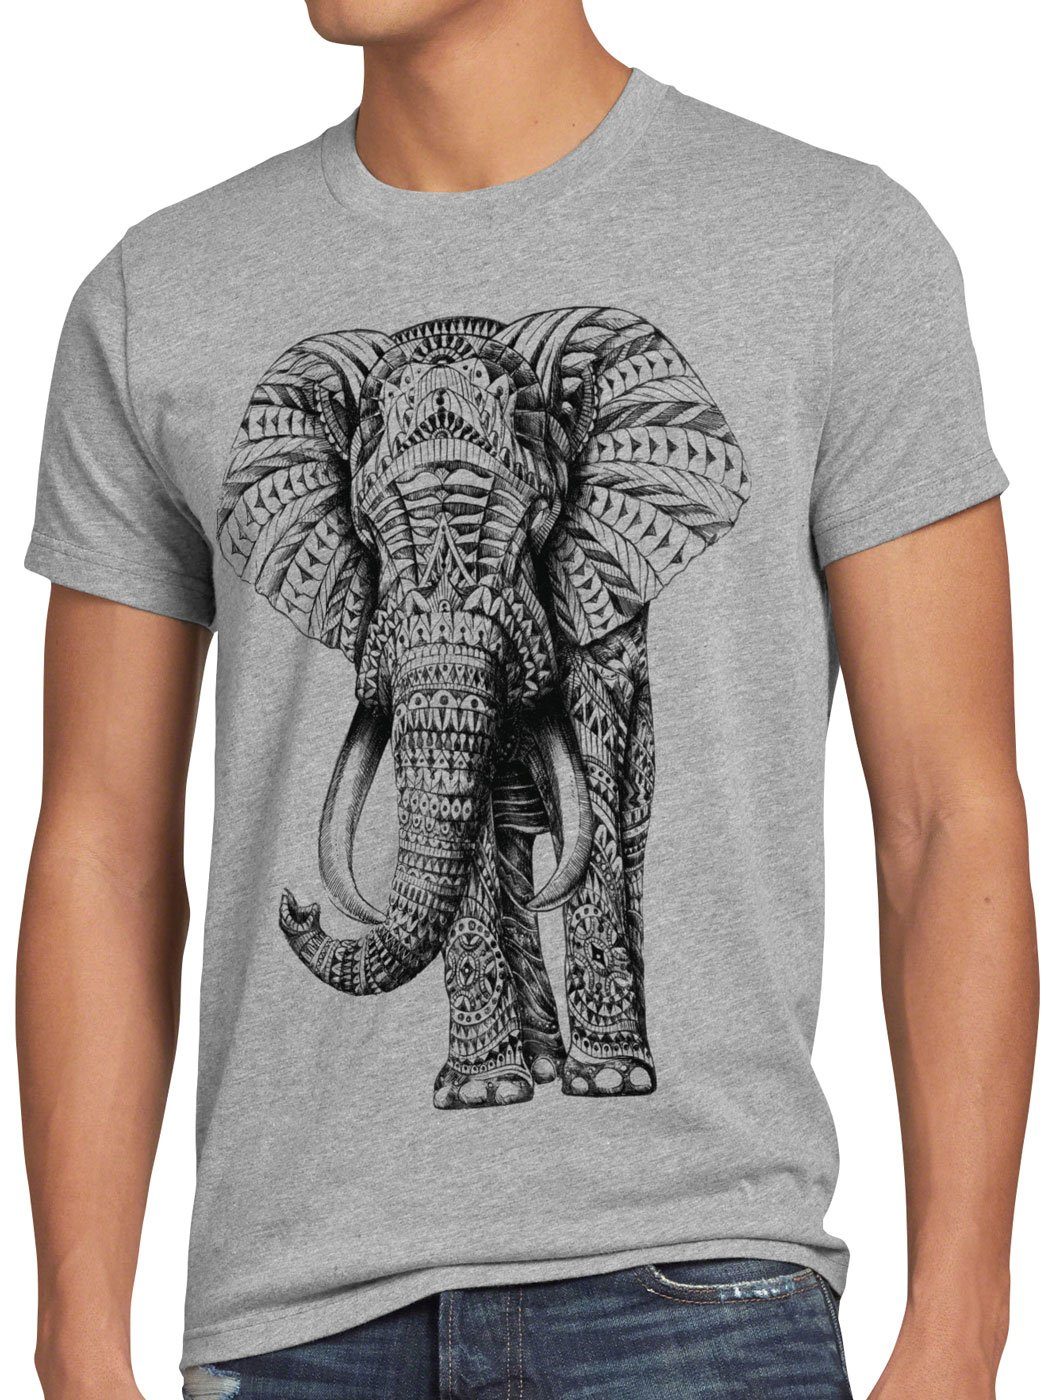 style3 Print-Shirt Herren zoo meliert elephant T-Shirt Ink grau urlaub Elefant